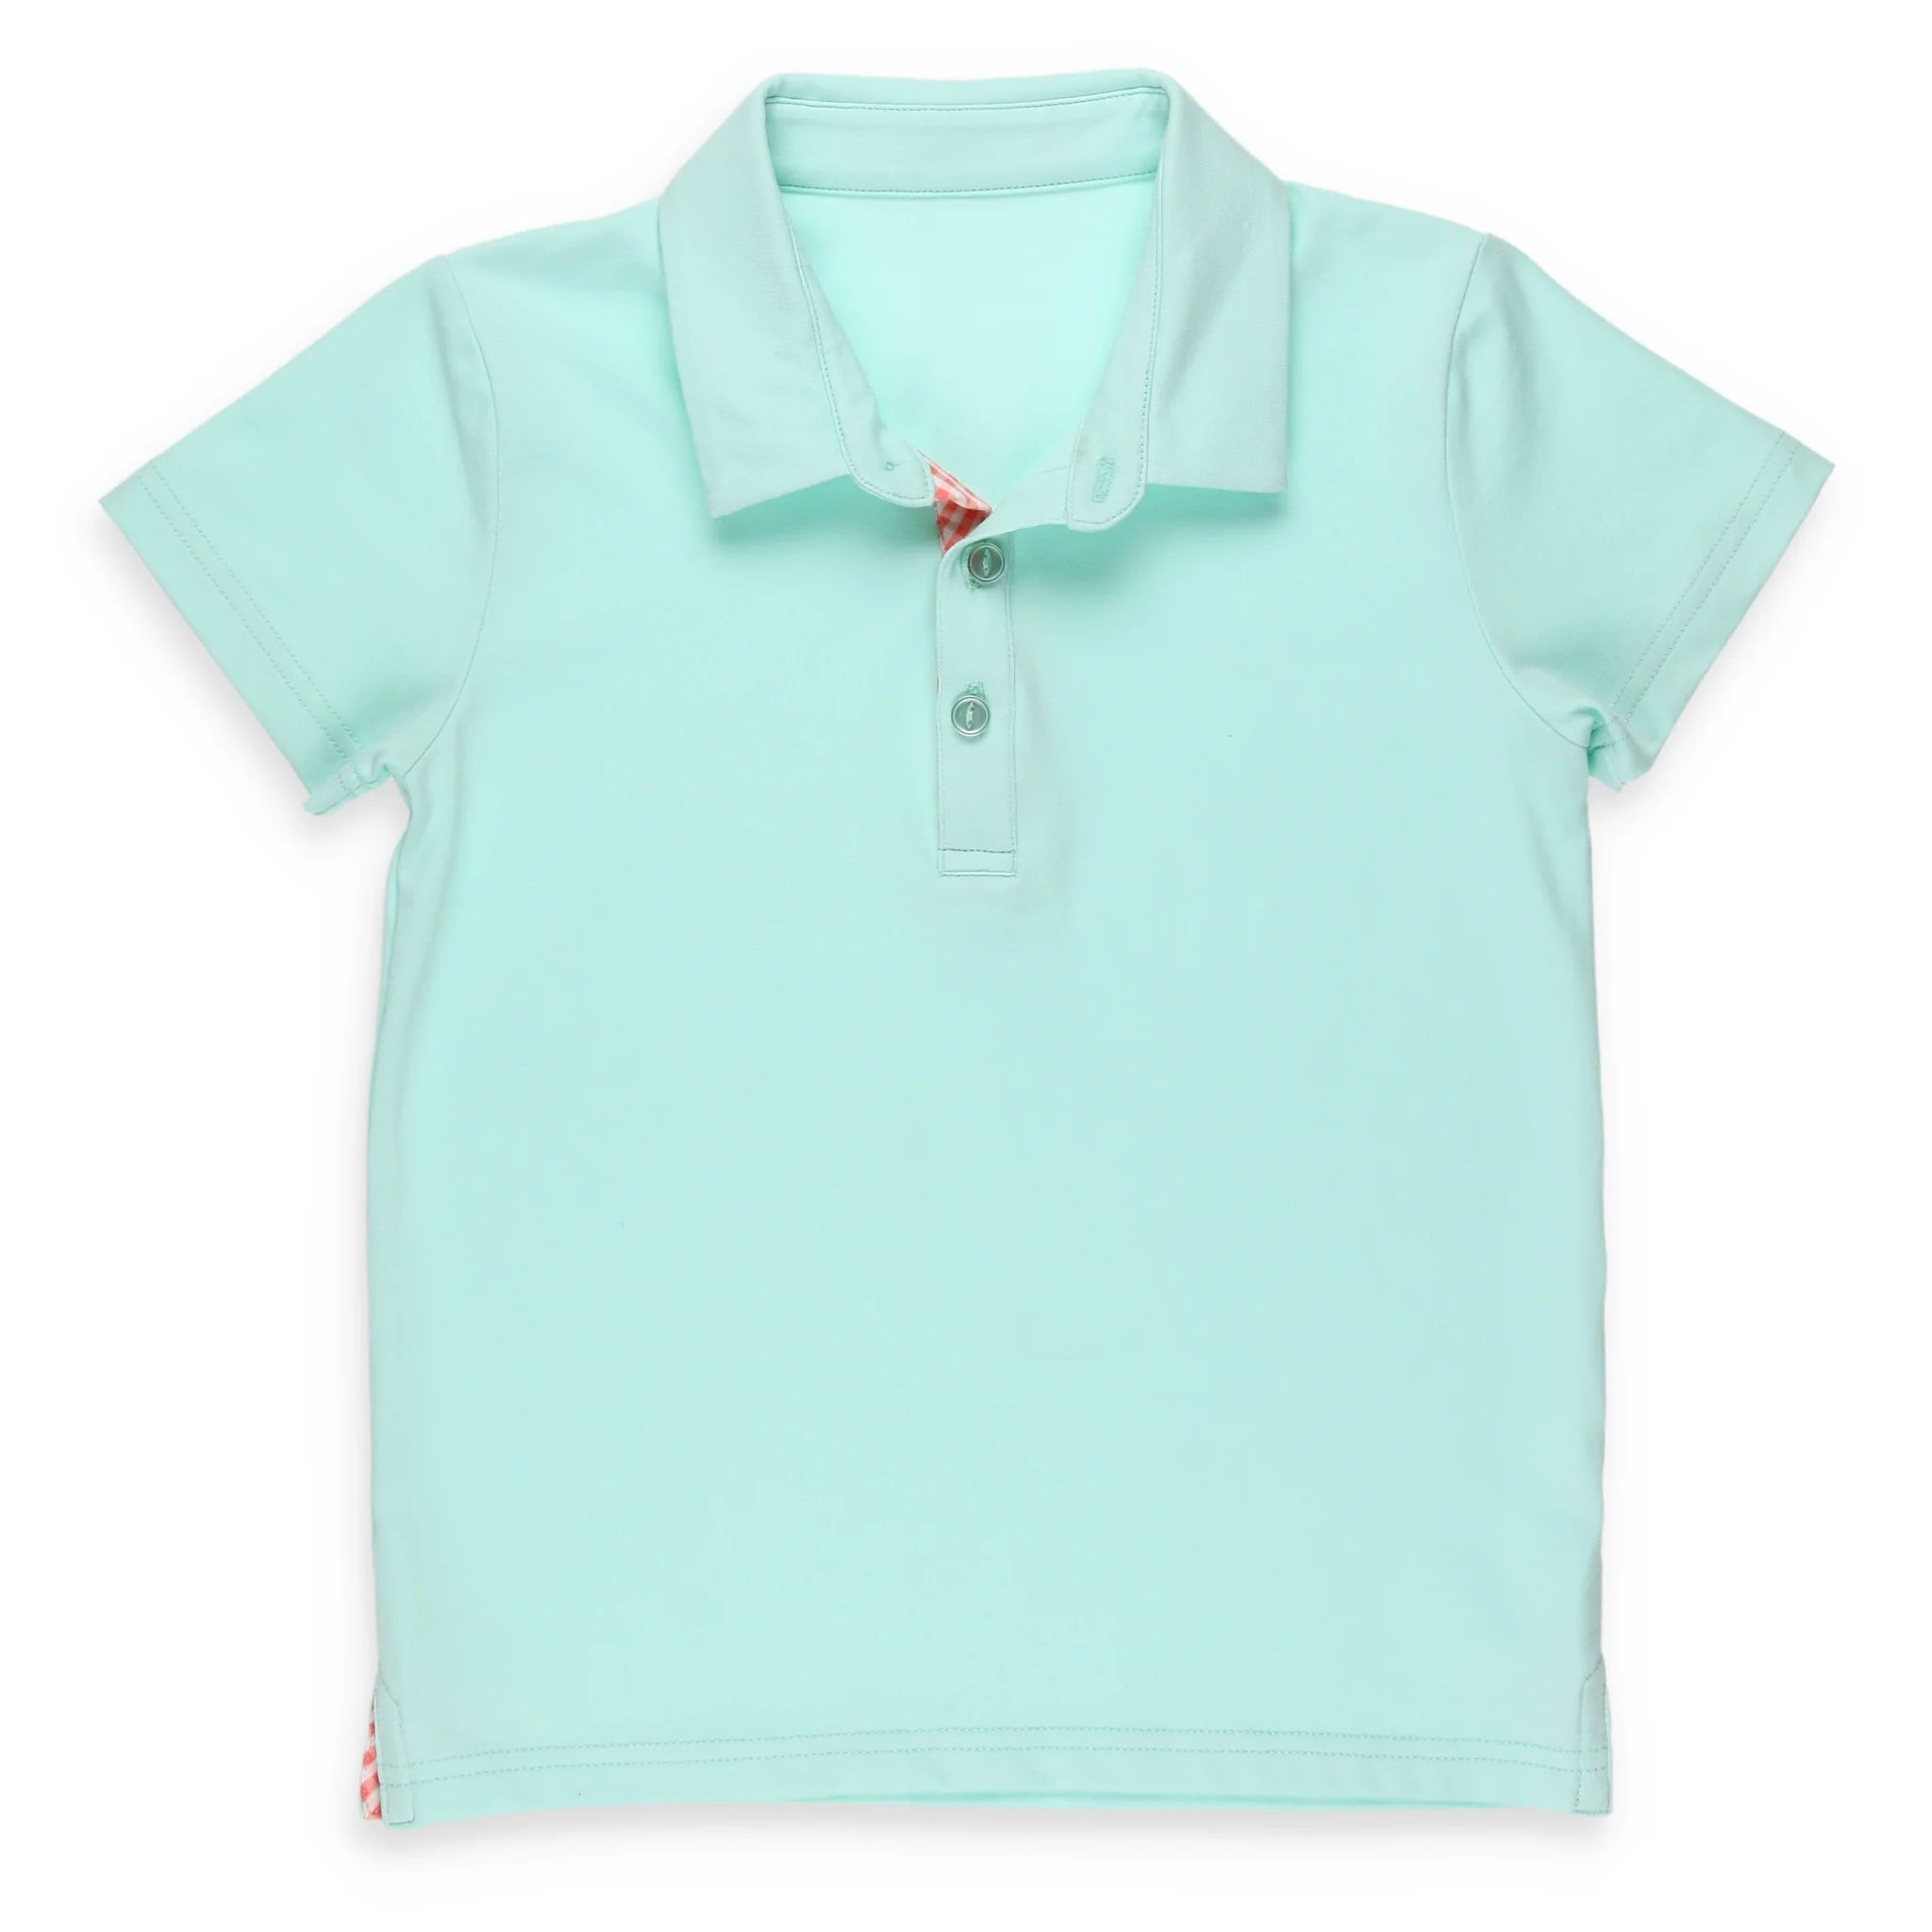 Boys Aqua Polo Shirt - Shrimp and Grits Kids | Shrimp and Grits Kids